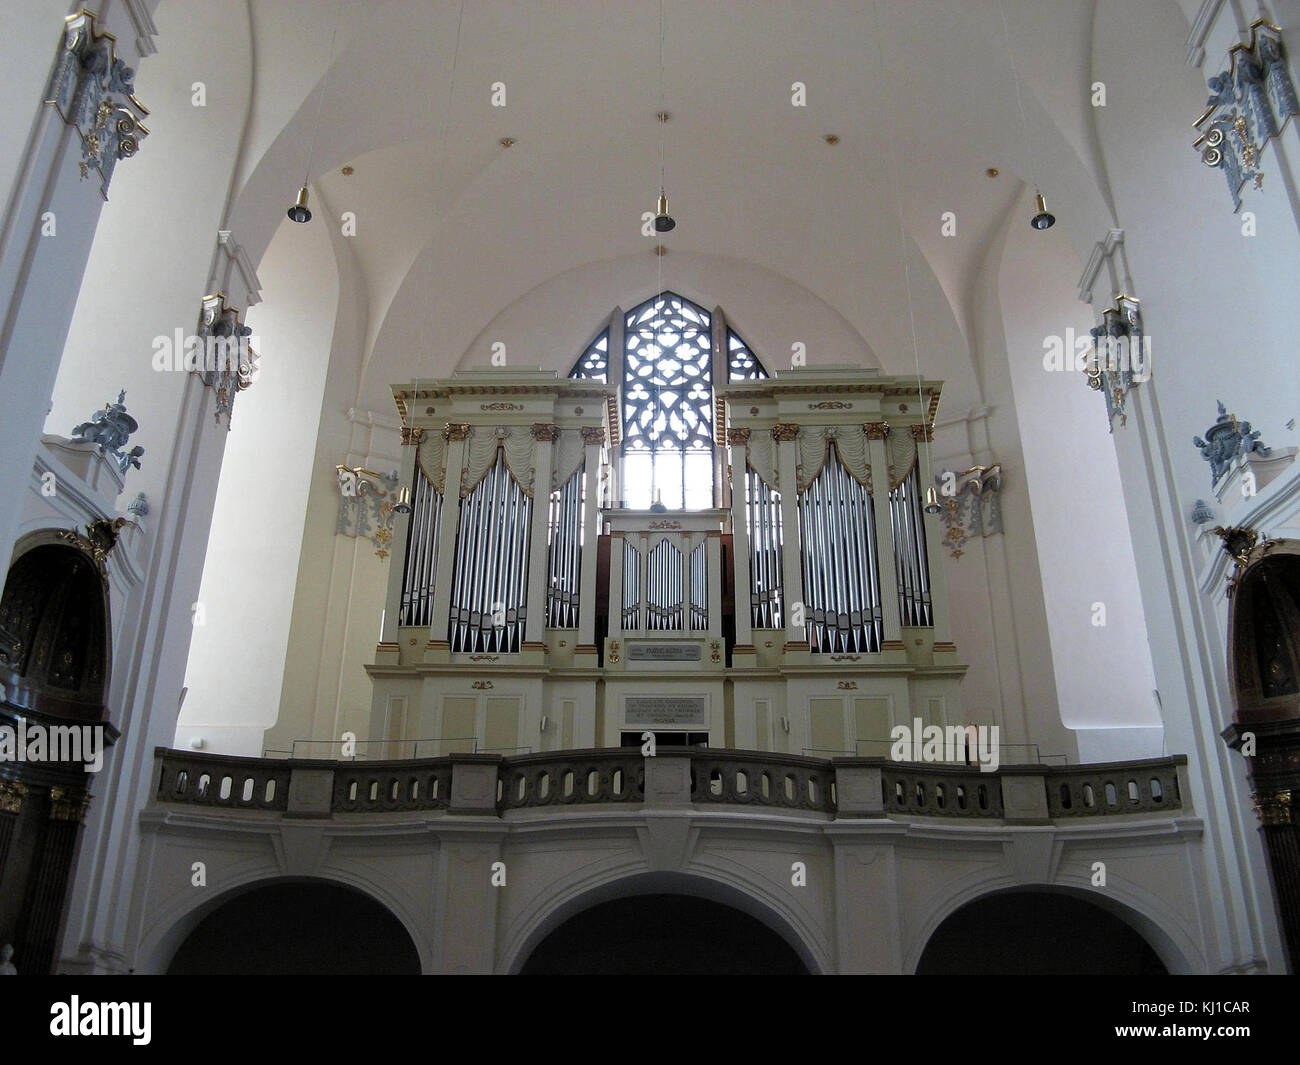 Organ in church Stock Photo